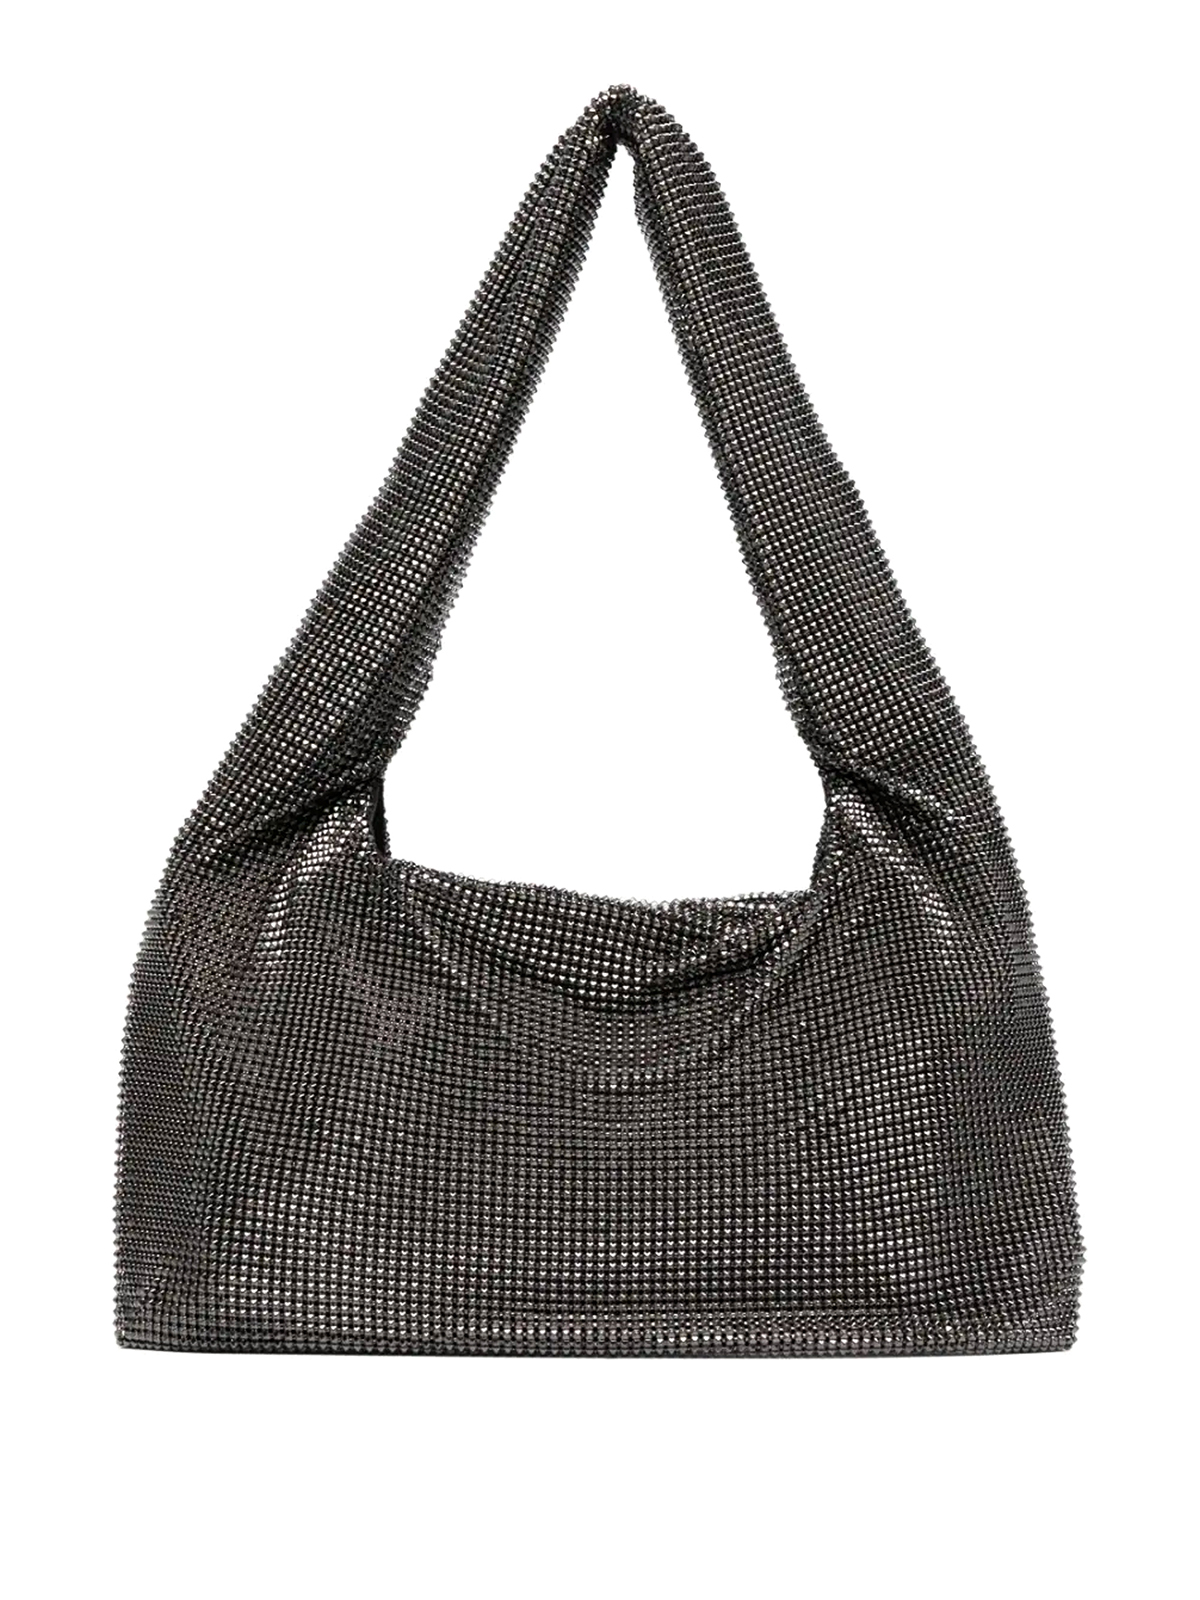 Totes bags Kara - Chainmail armpit bag - HB276E2107CHAINMAIL | iKRIX.com